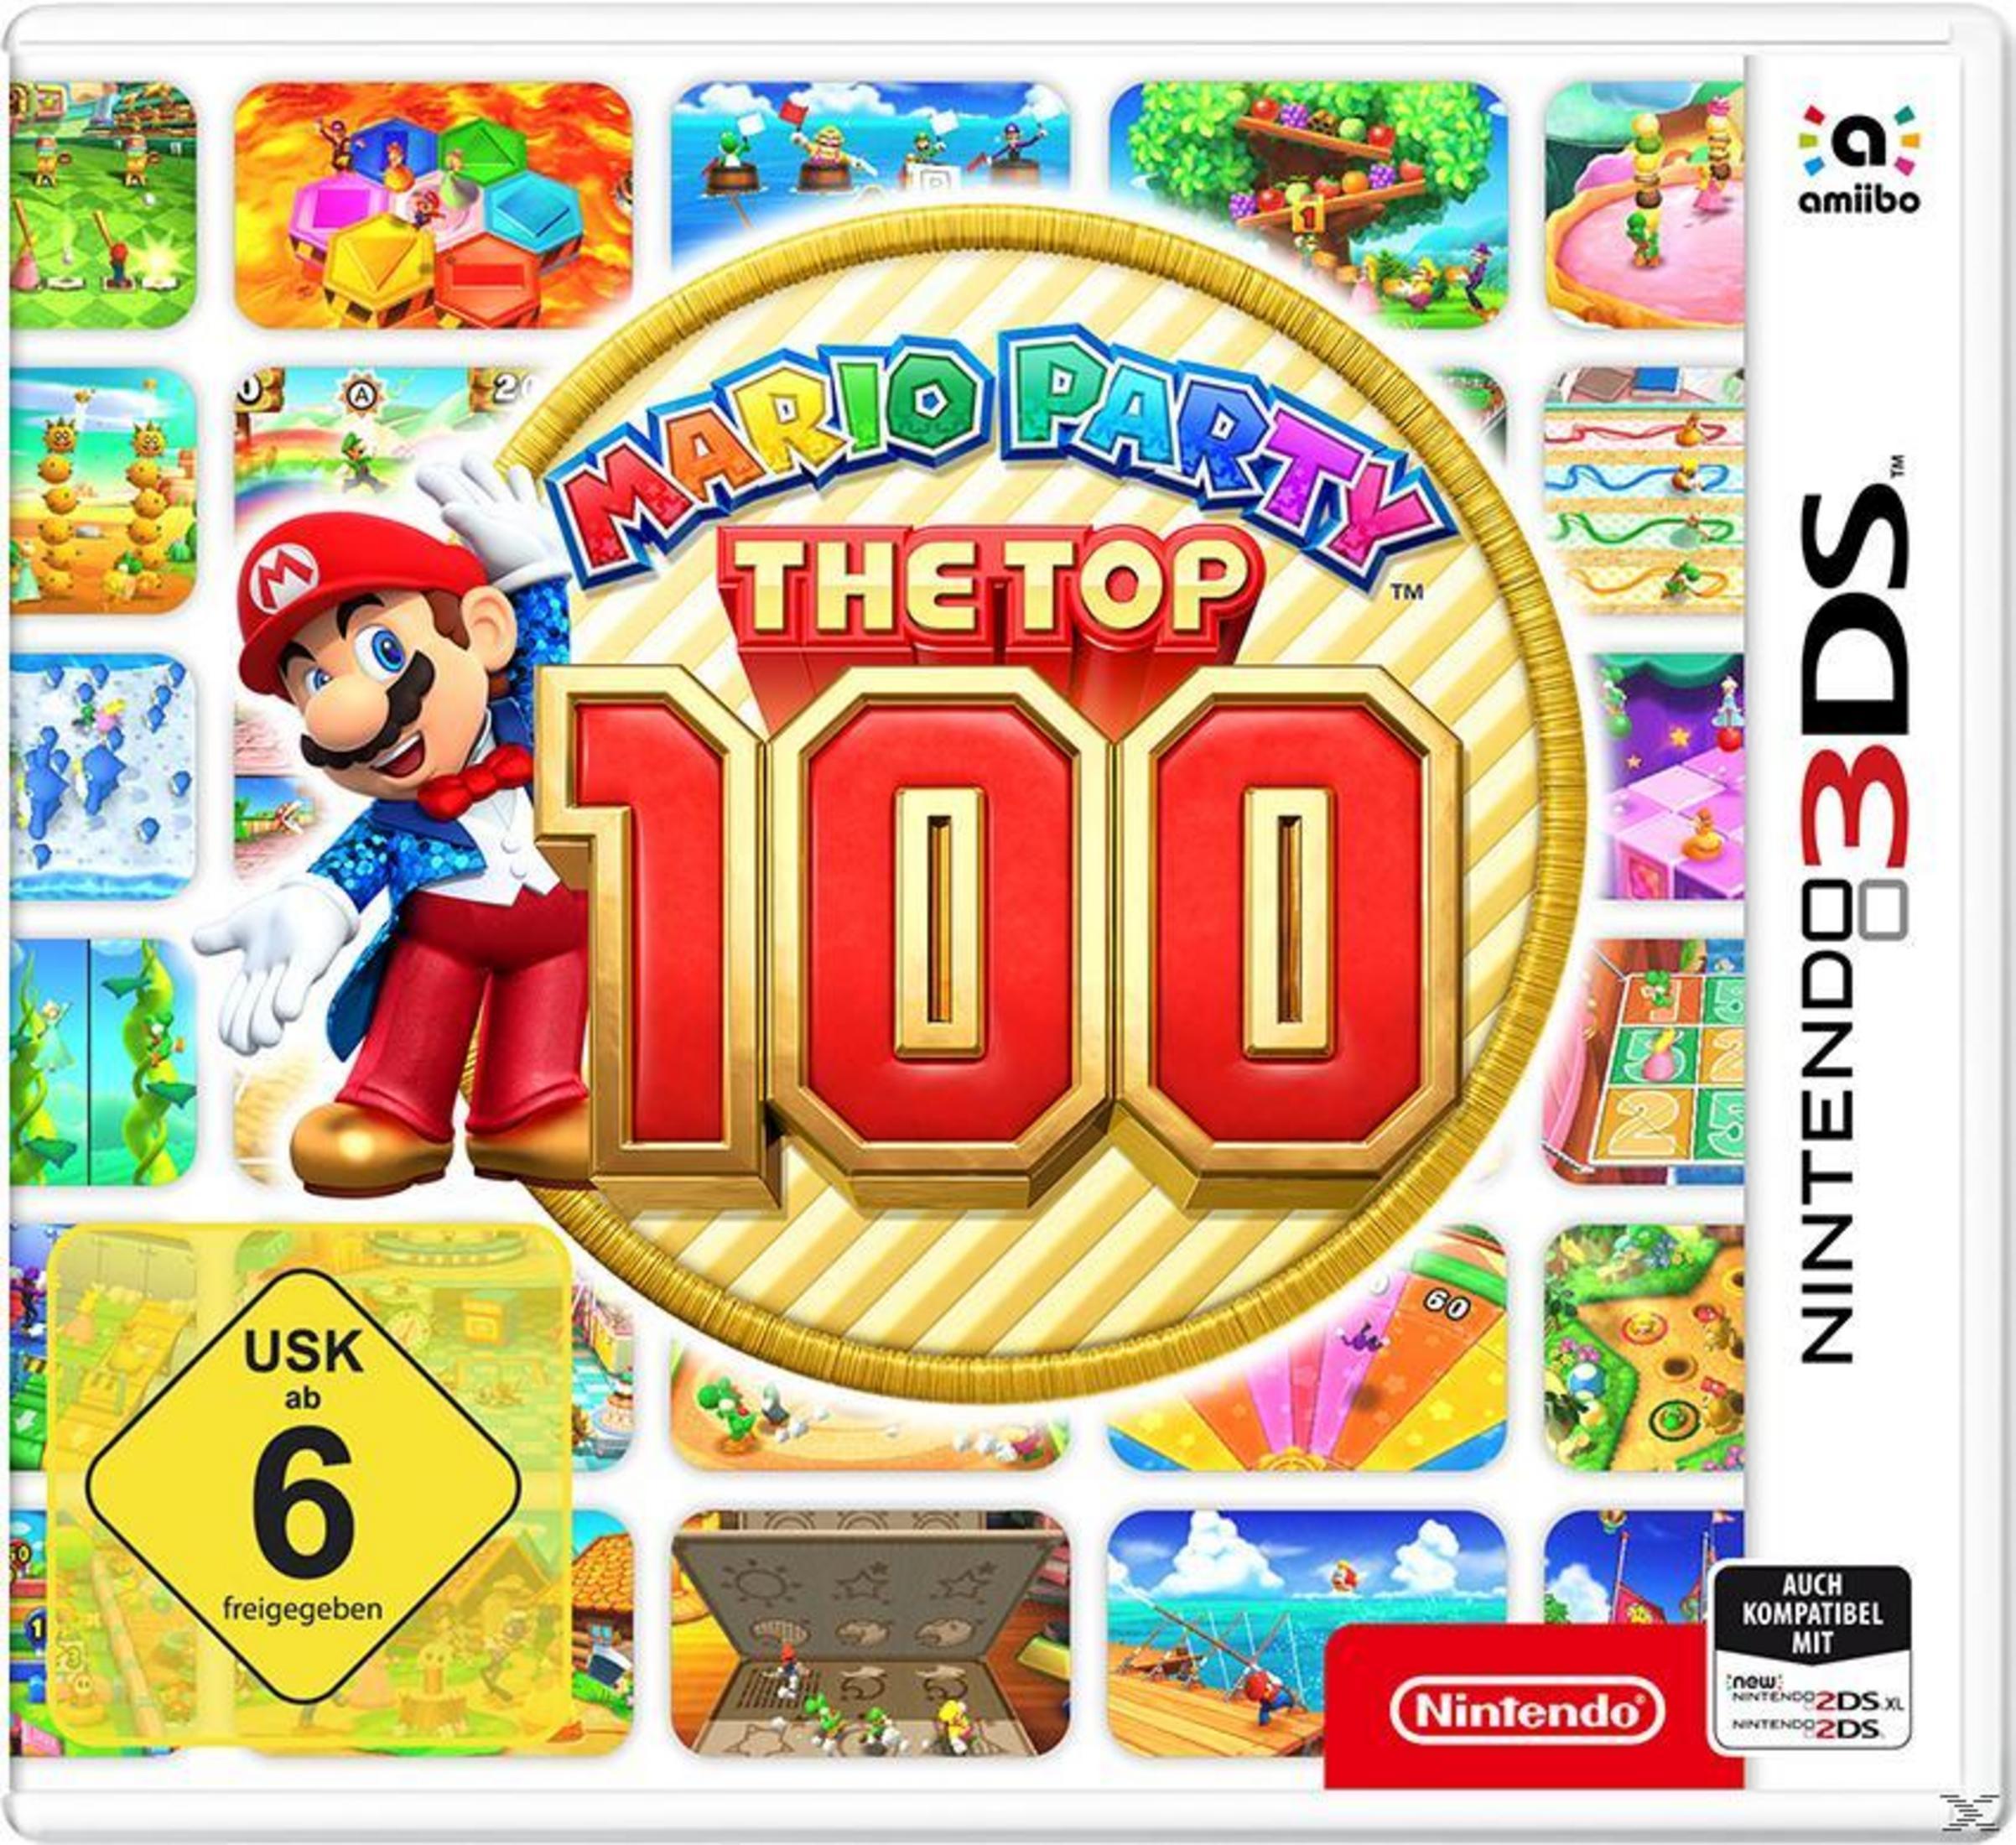 100 Mario Party: 3DS] Top [Nintendo - The